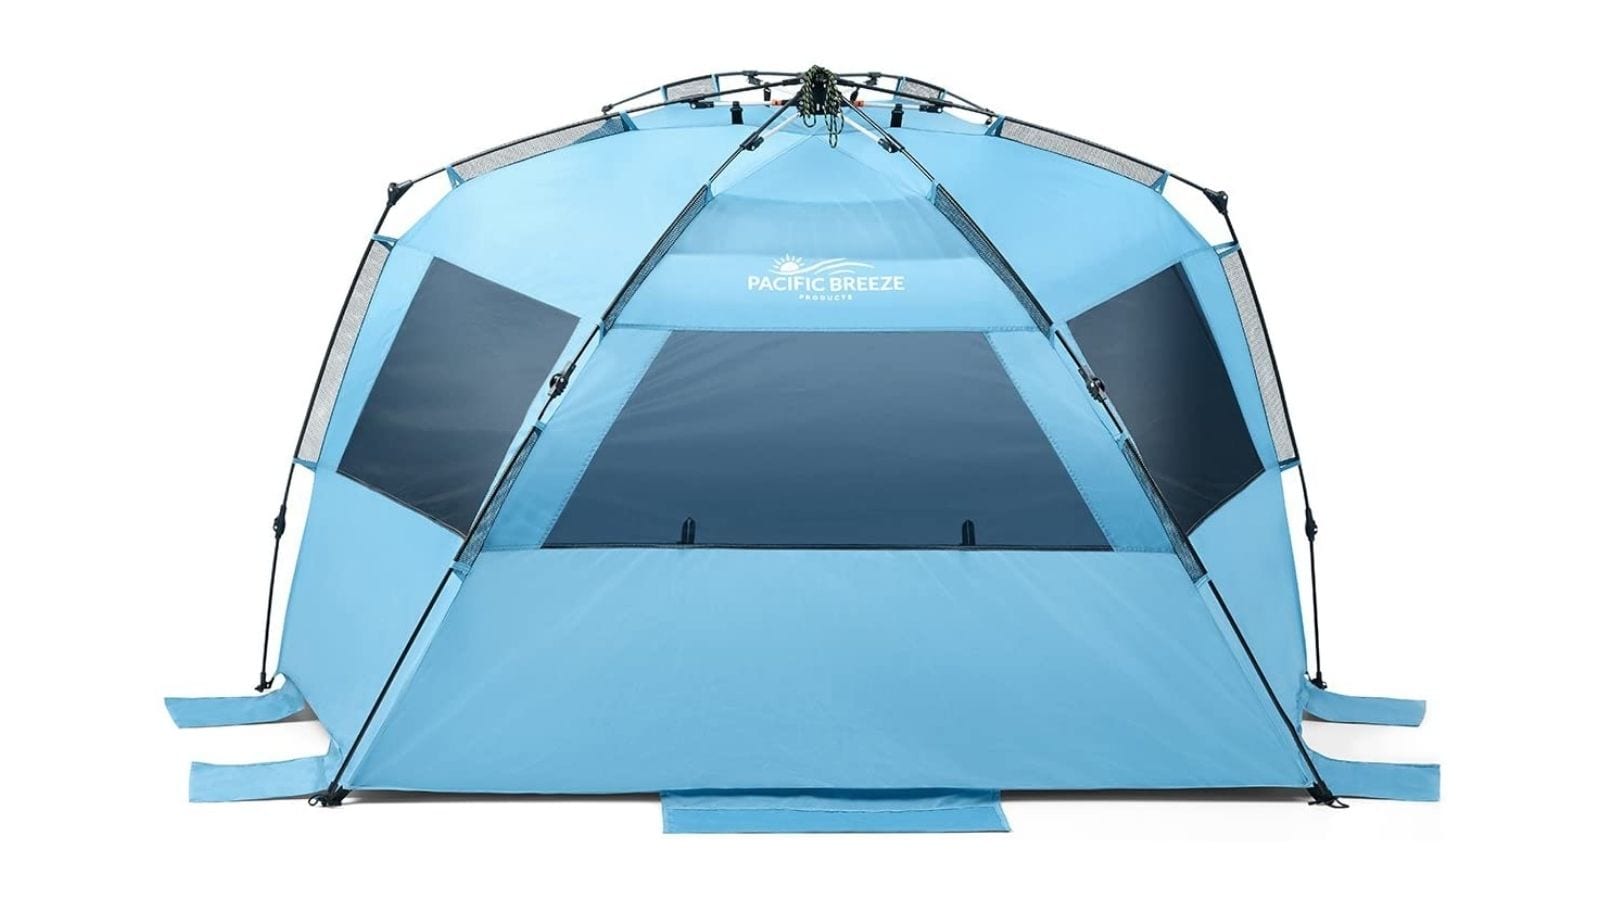 Sun camping. Pacific Breeze Tent. Палатка Caribee Pacific 6 easy up. Тент normal Бриз 360. Палатка летняя.